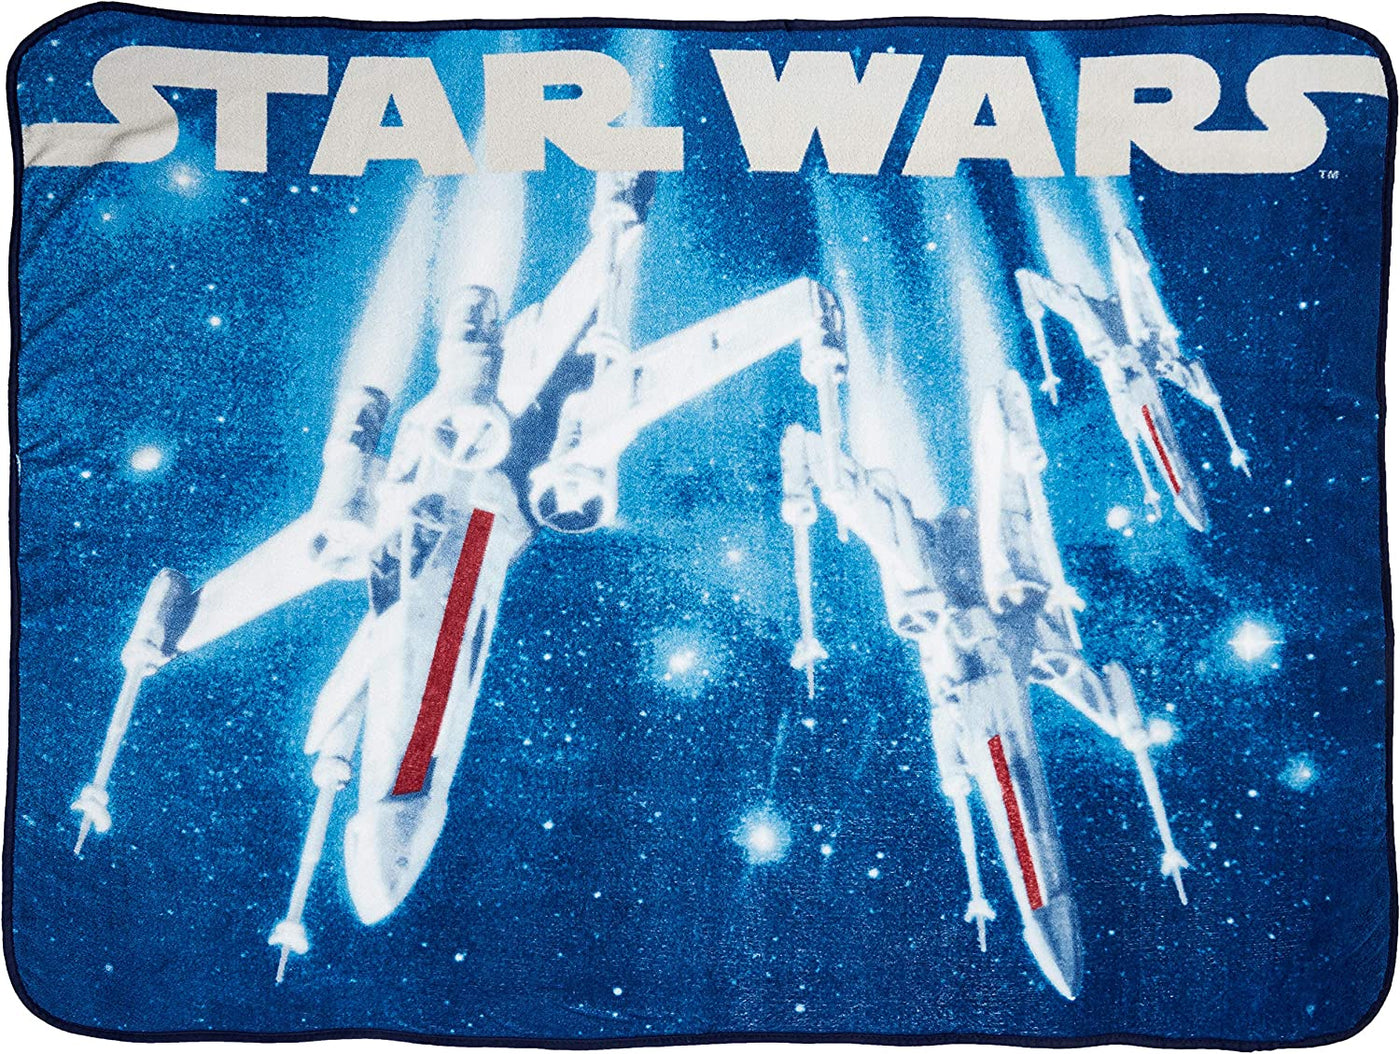 Star Wars Classic Vintage Logo Throw Blanket, Blue